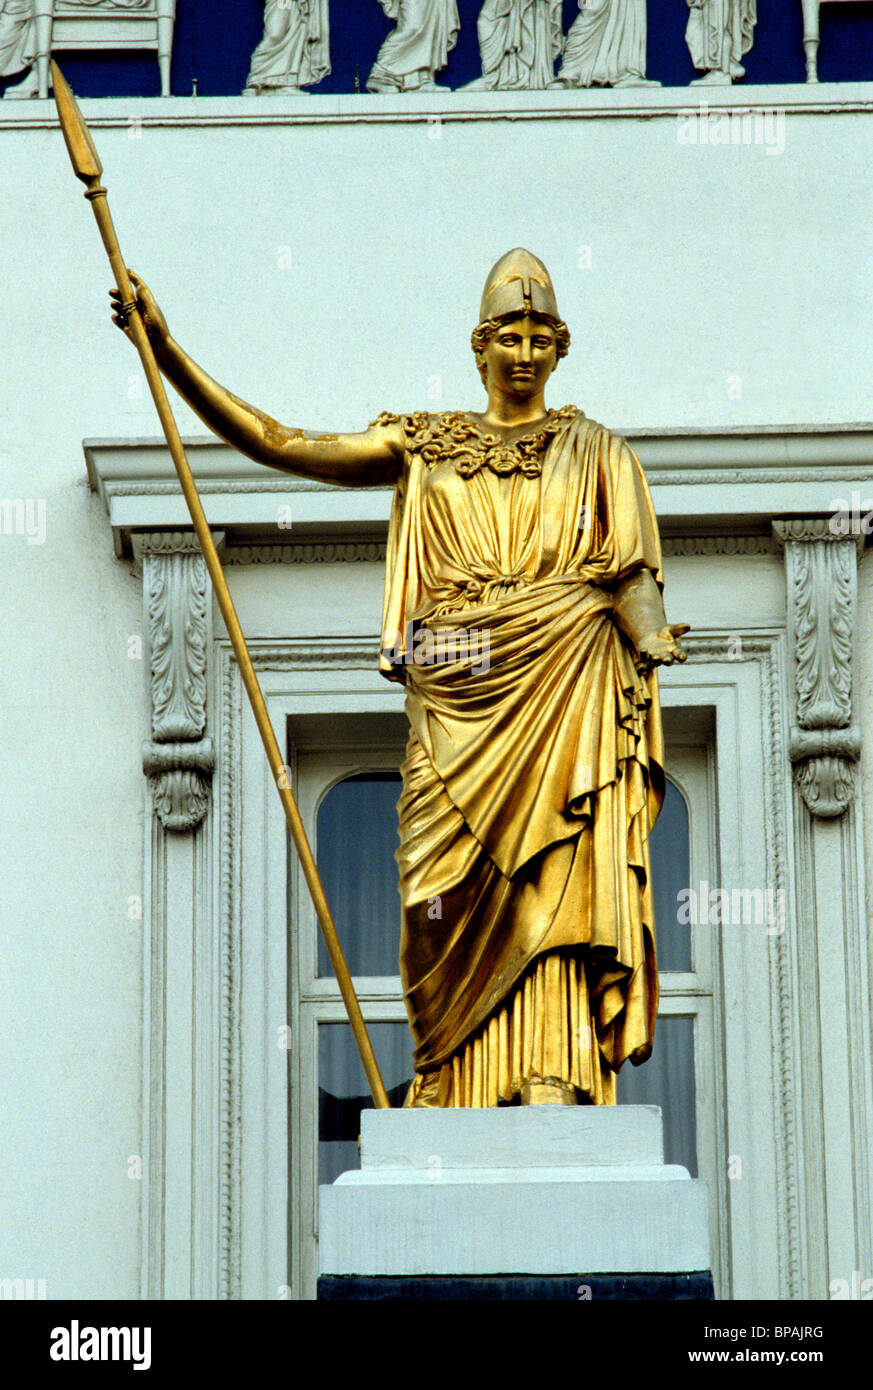 Pallas Athene statue, Athenaeum Club, St.James, London England UK English statues clubs Pall Mall gilt gilded Greek classical Stock Photo